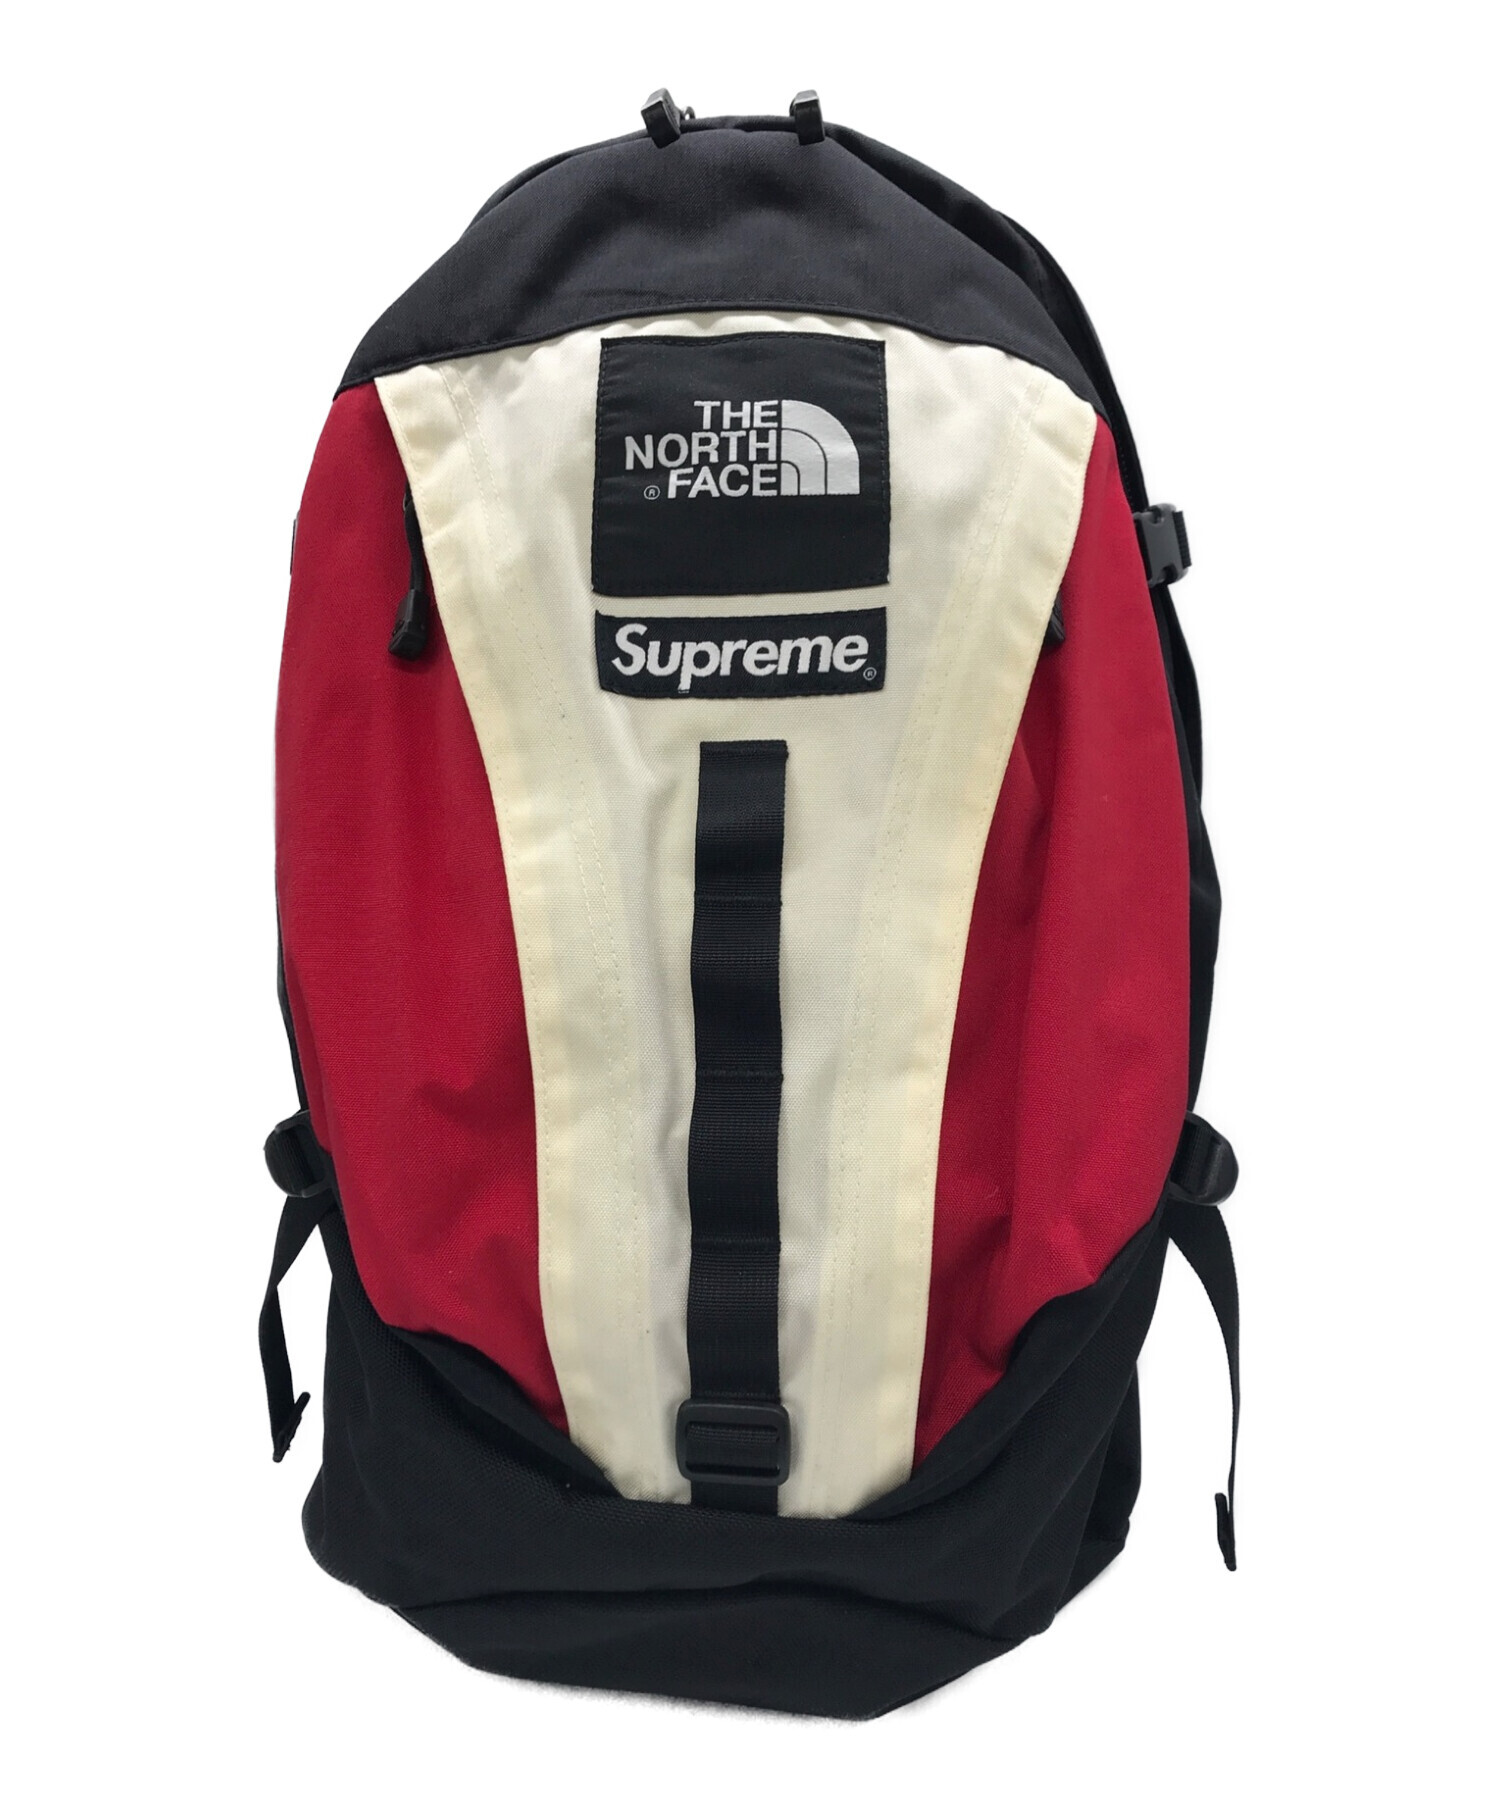 THE NORTH FACE (ザ ノース フェイス) Supreme (シュプリーム) Expedition backpack　バックパック  レッド×ブラック サイズ:下記参照